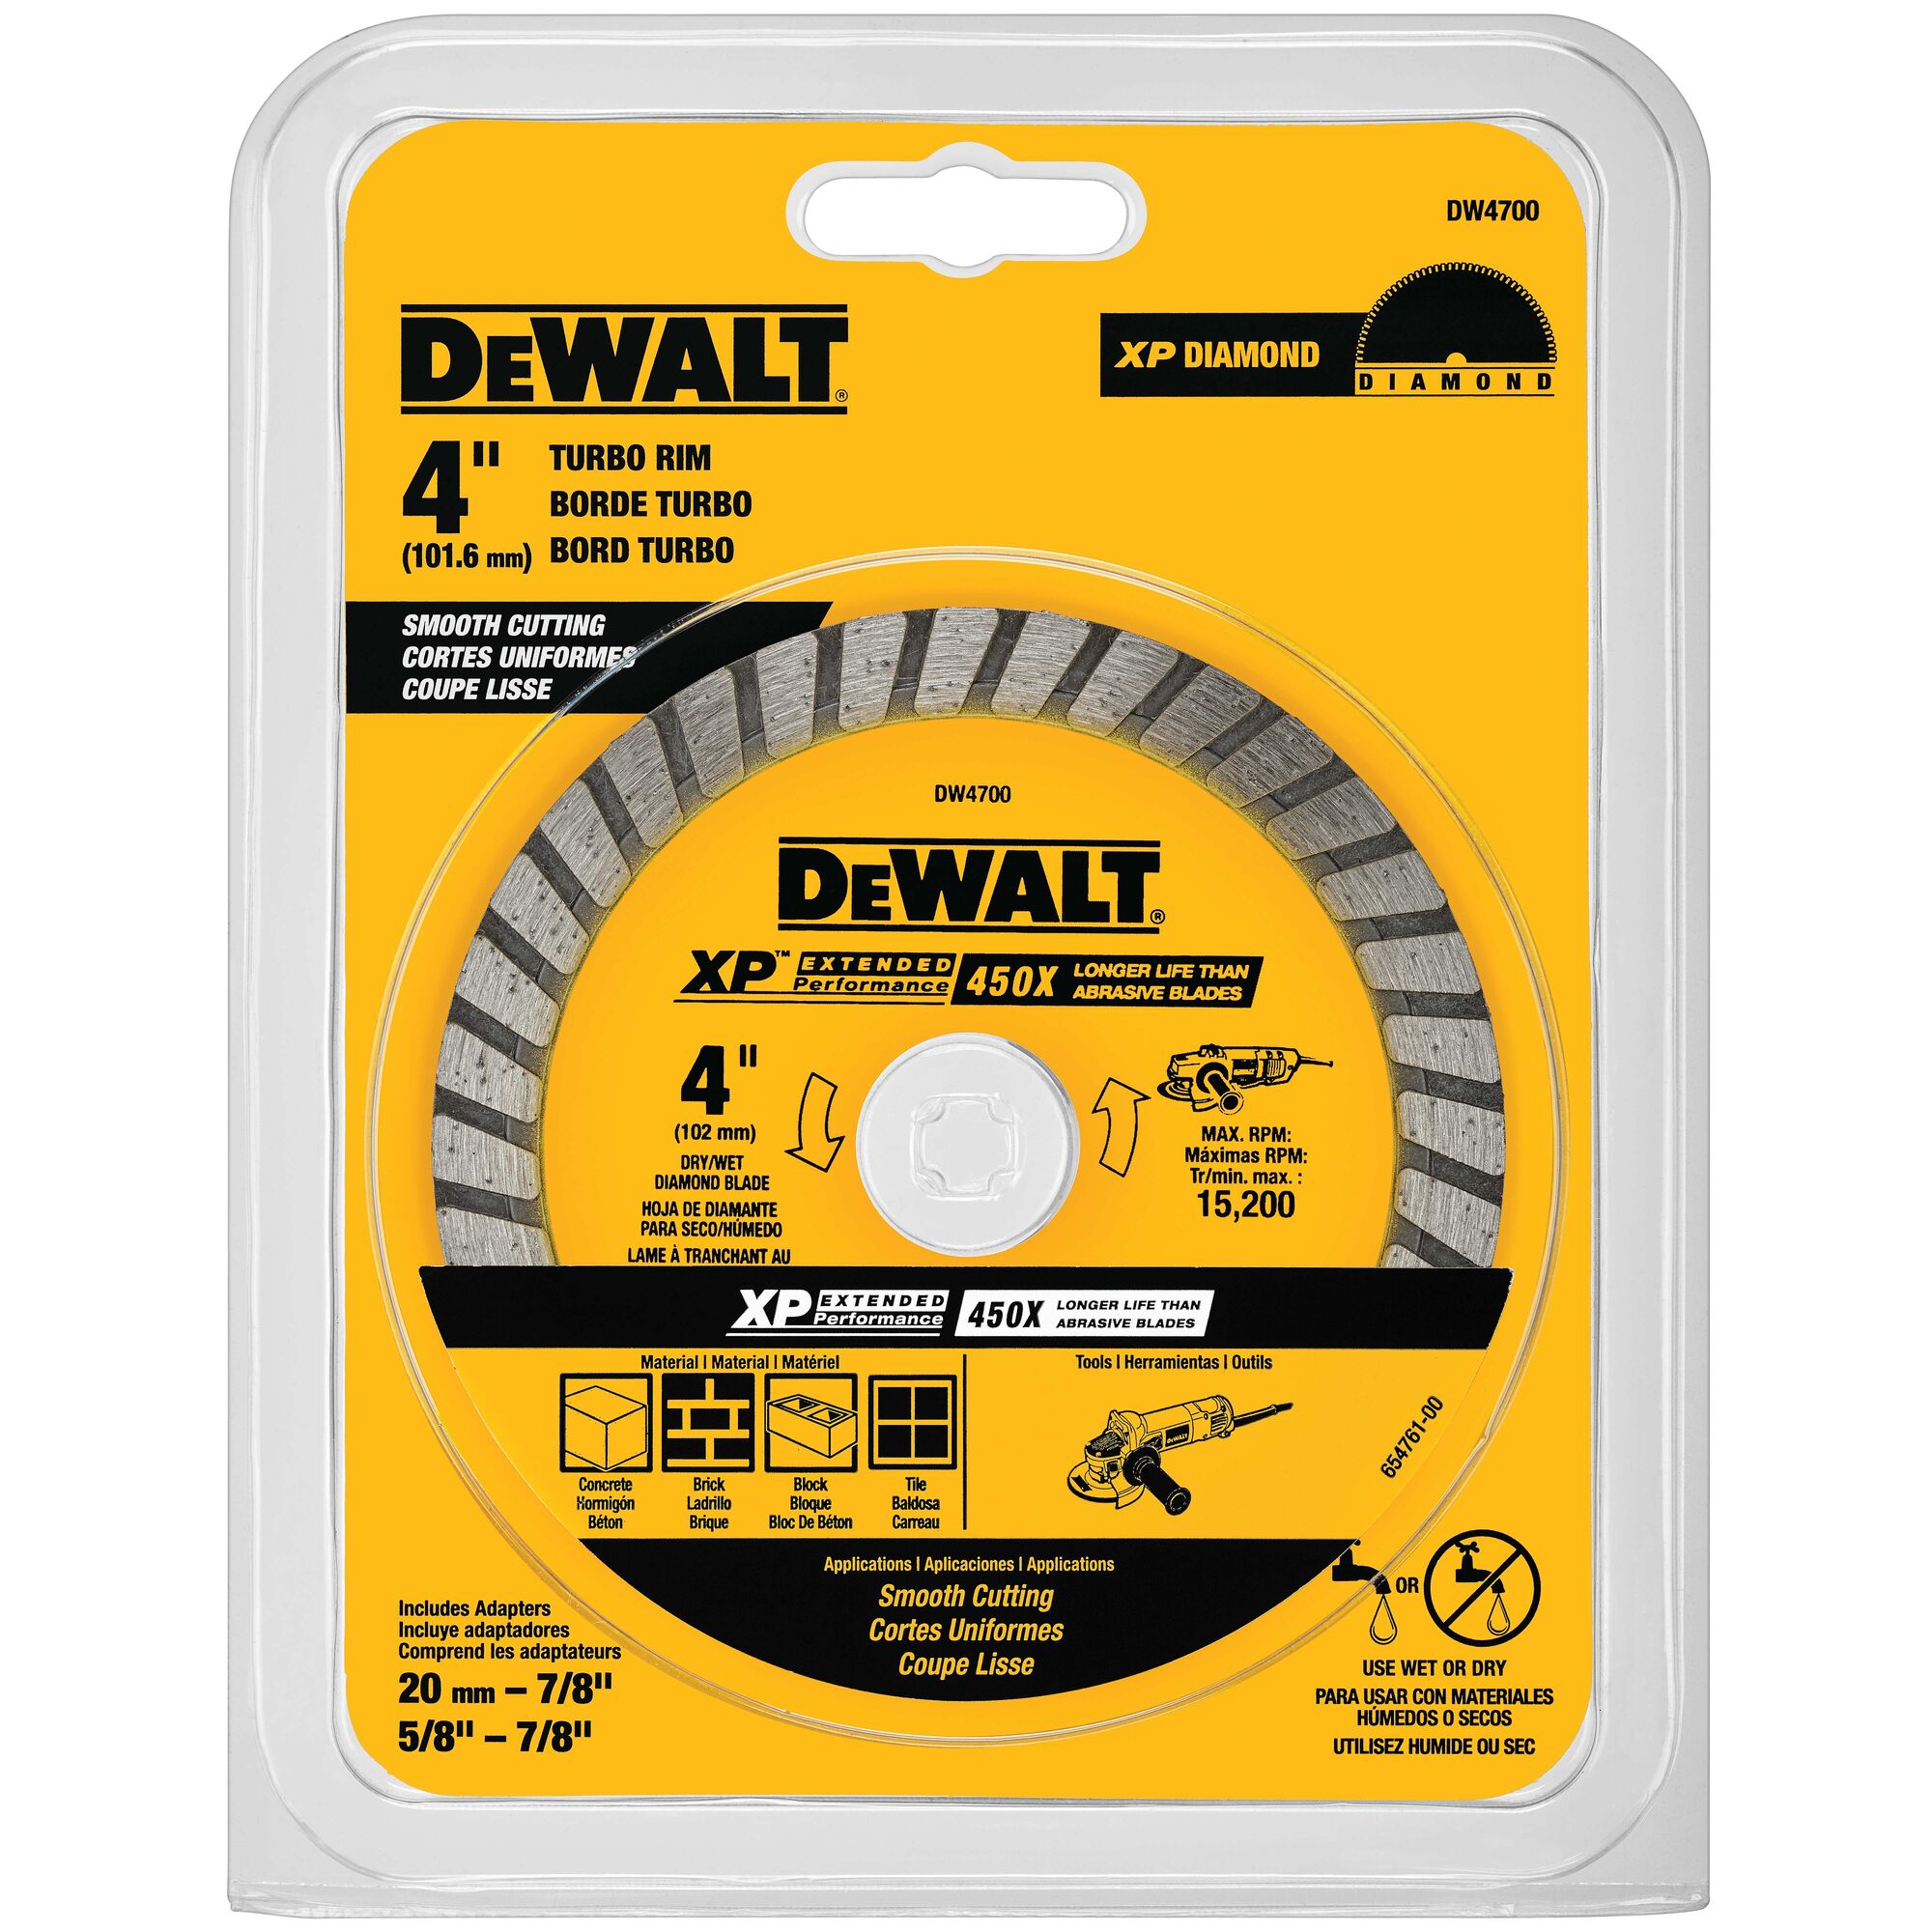 DEWALT DW4700 4" Dry or Wet Cutting Continuous Rim Diamond Saw Blade 7/8" Arbor 